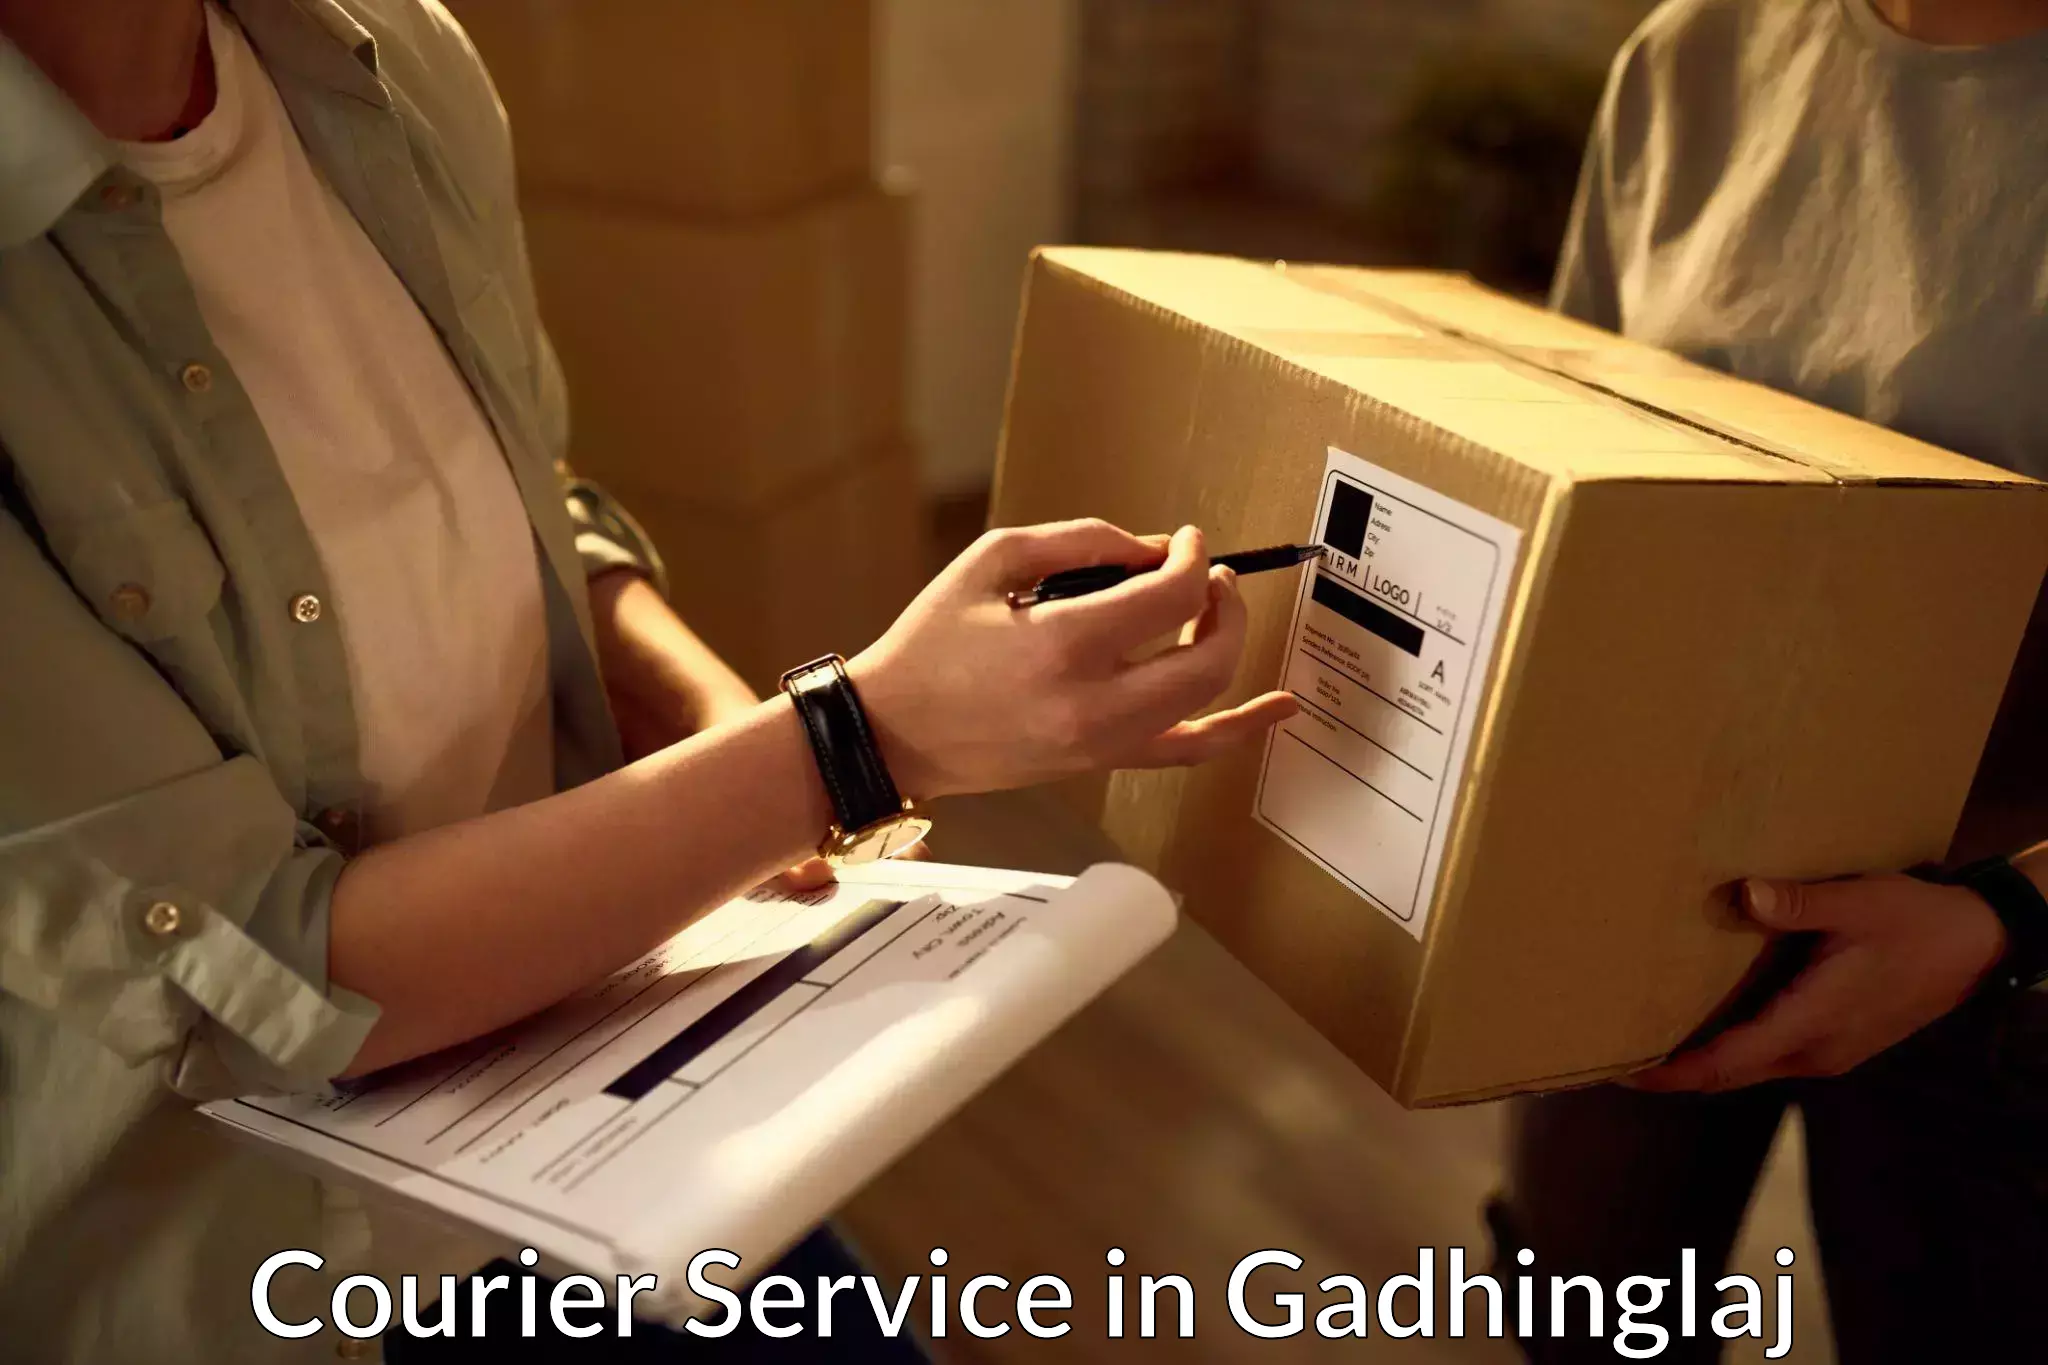 Tech-enabled shipping in Gadhinglaj